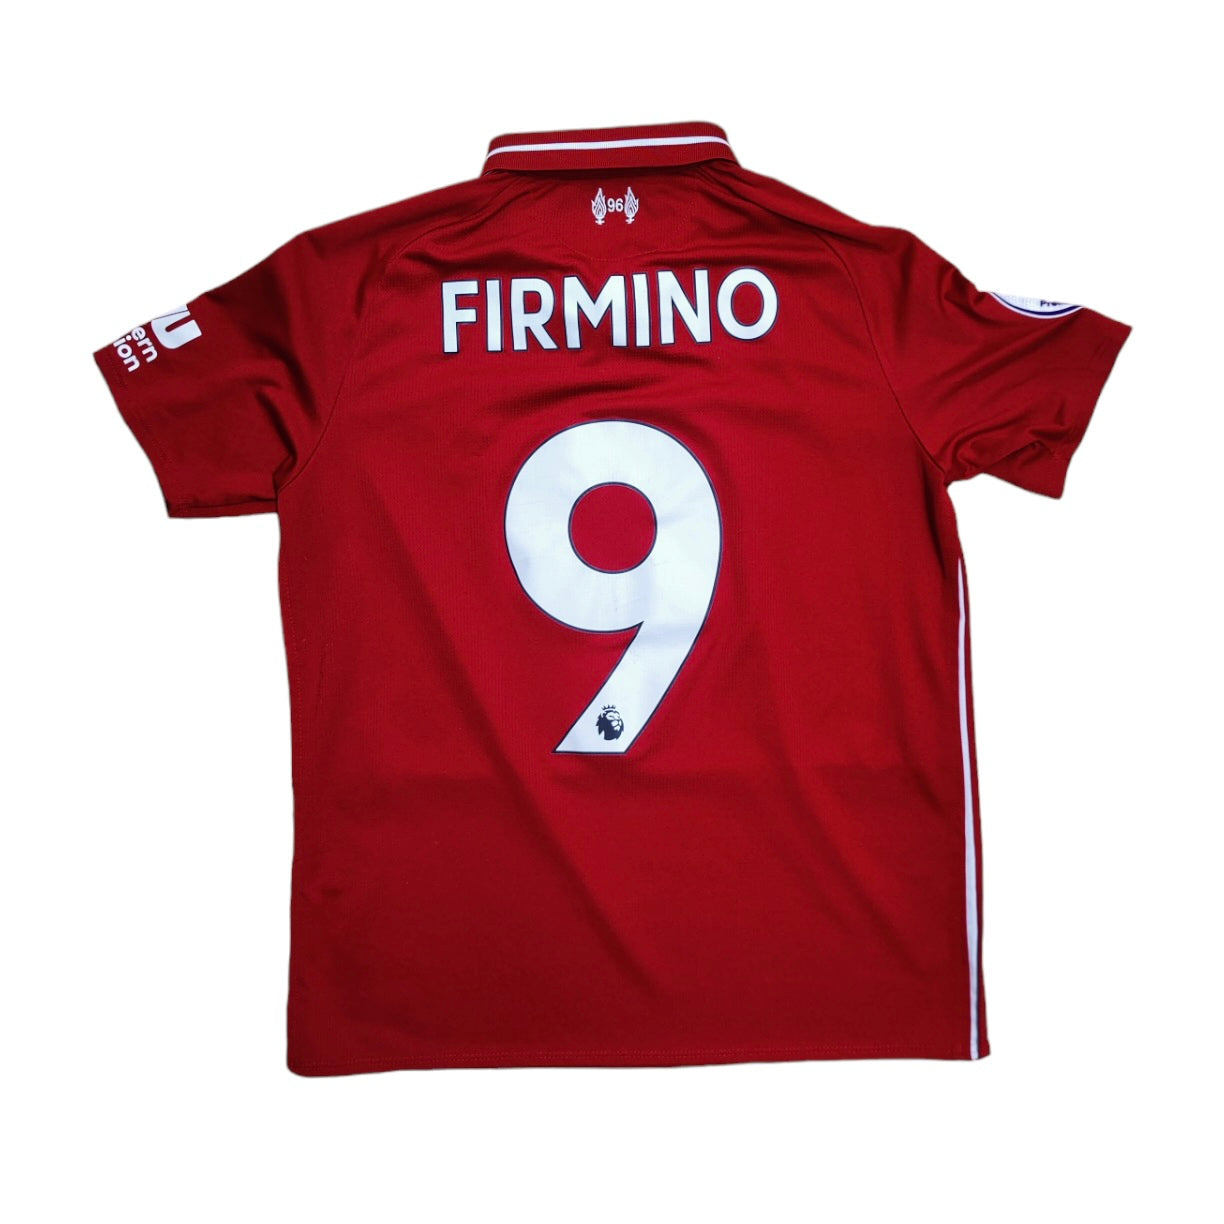 New Balance Liverpool FC Firmino 2018/2019 Home Football Jersey